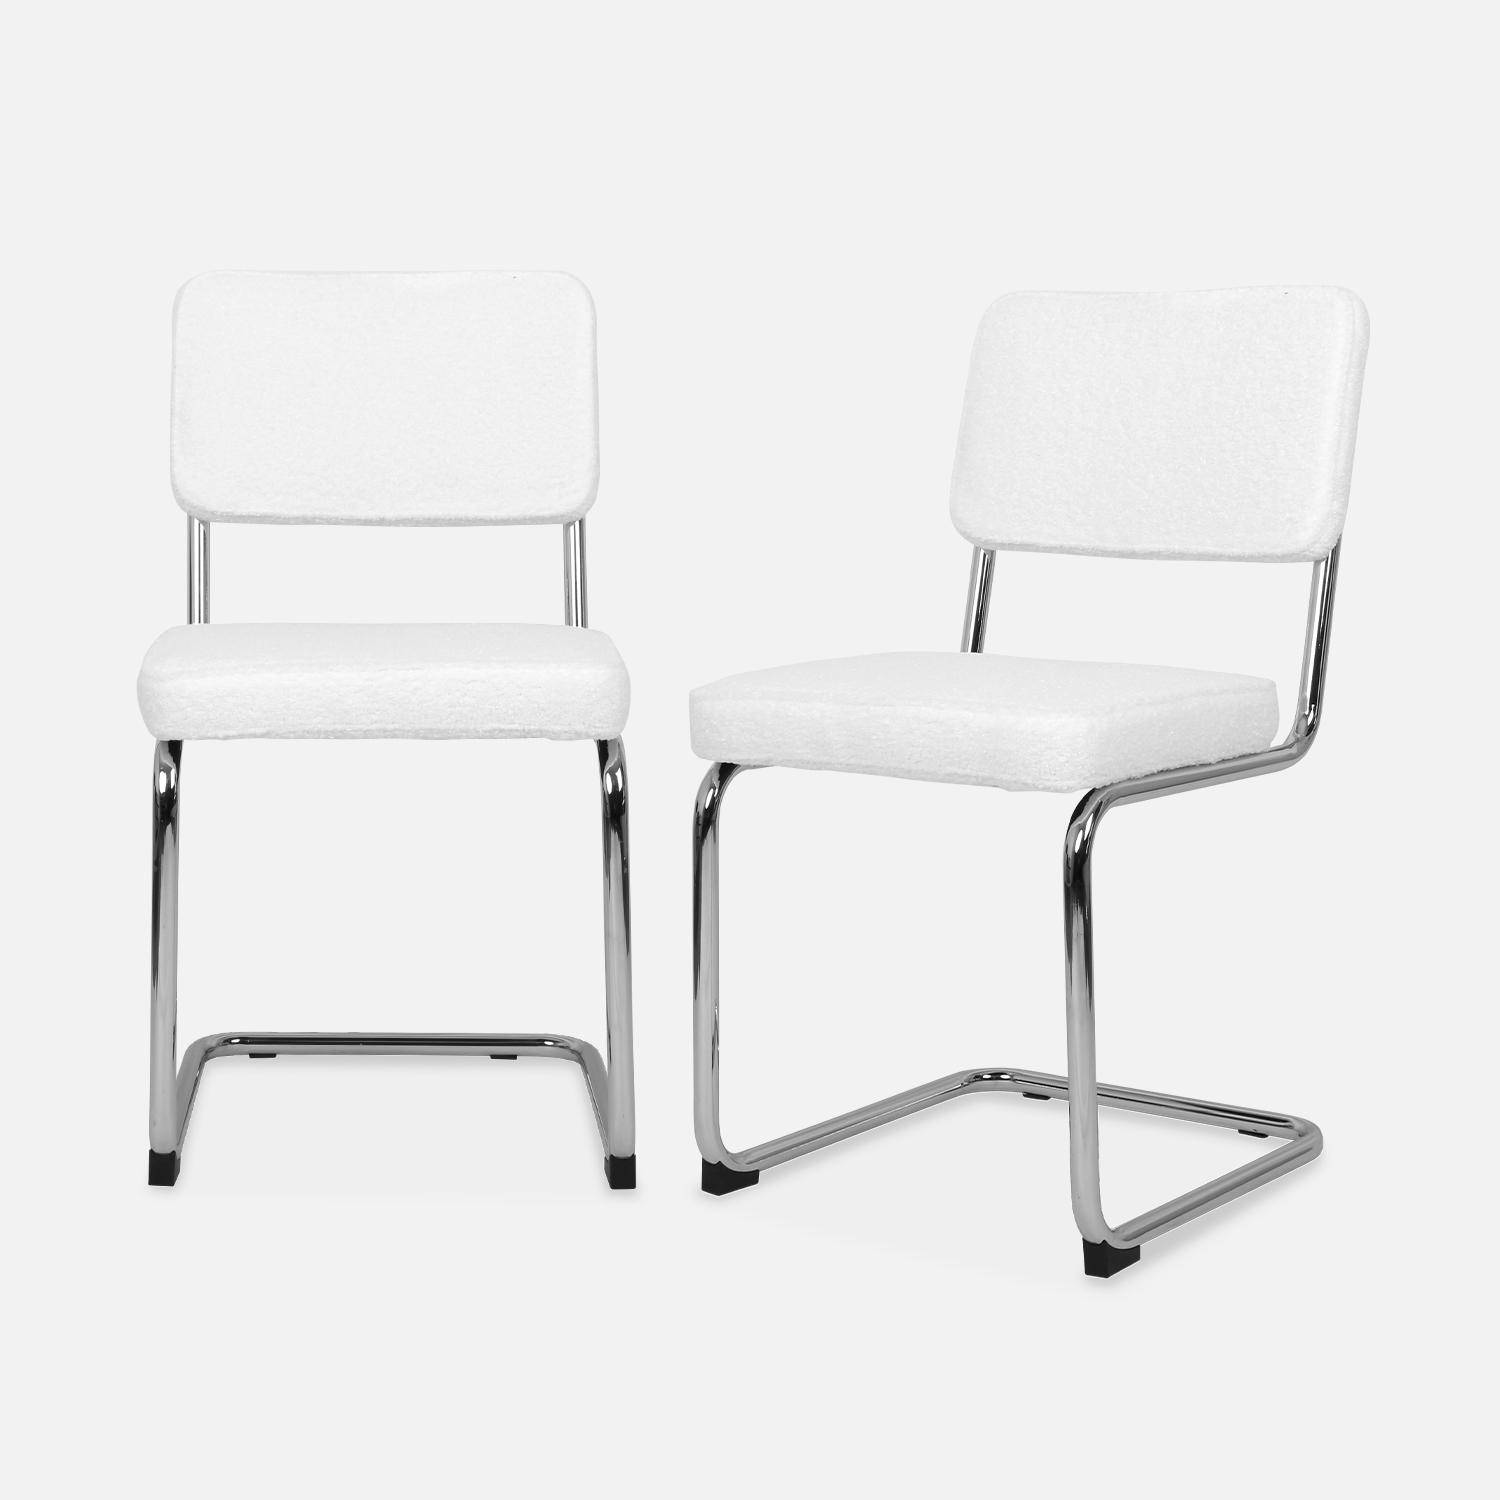 2 sillas voladizas - Maja - con rizos blancos, 46 x 54,5 x 84,5cm   Photo3